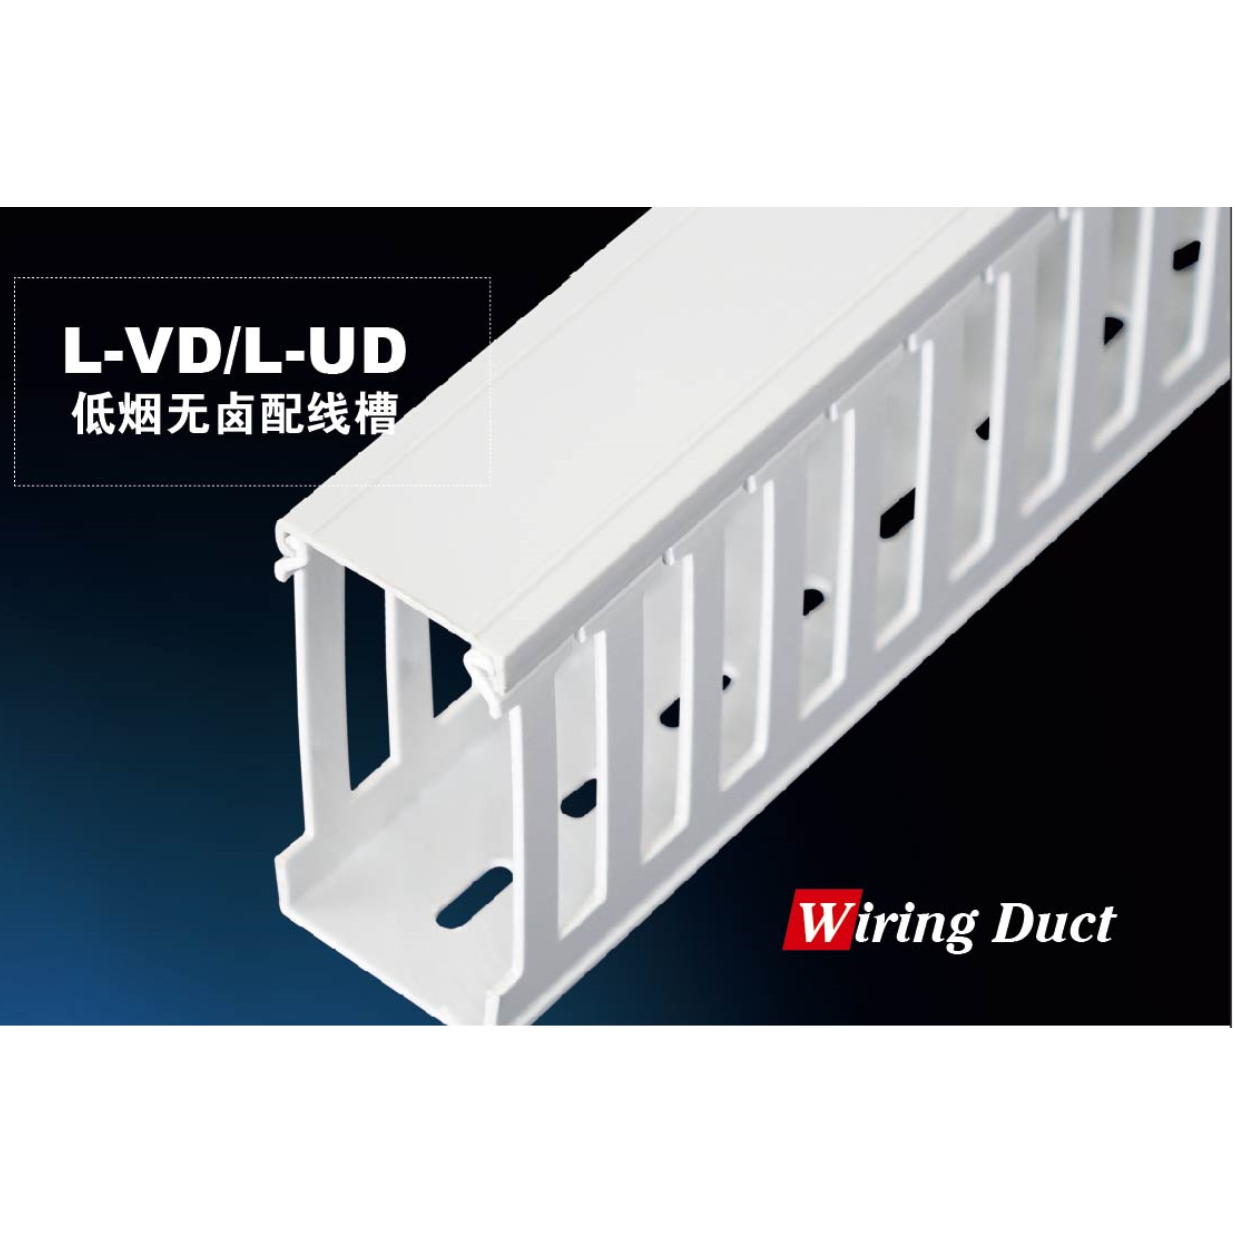 Wiring duct L-VD/L-UD